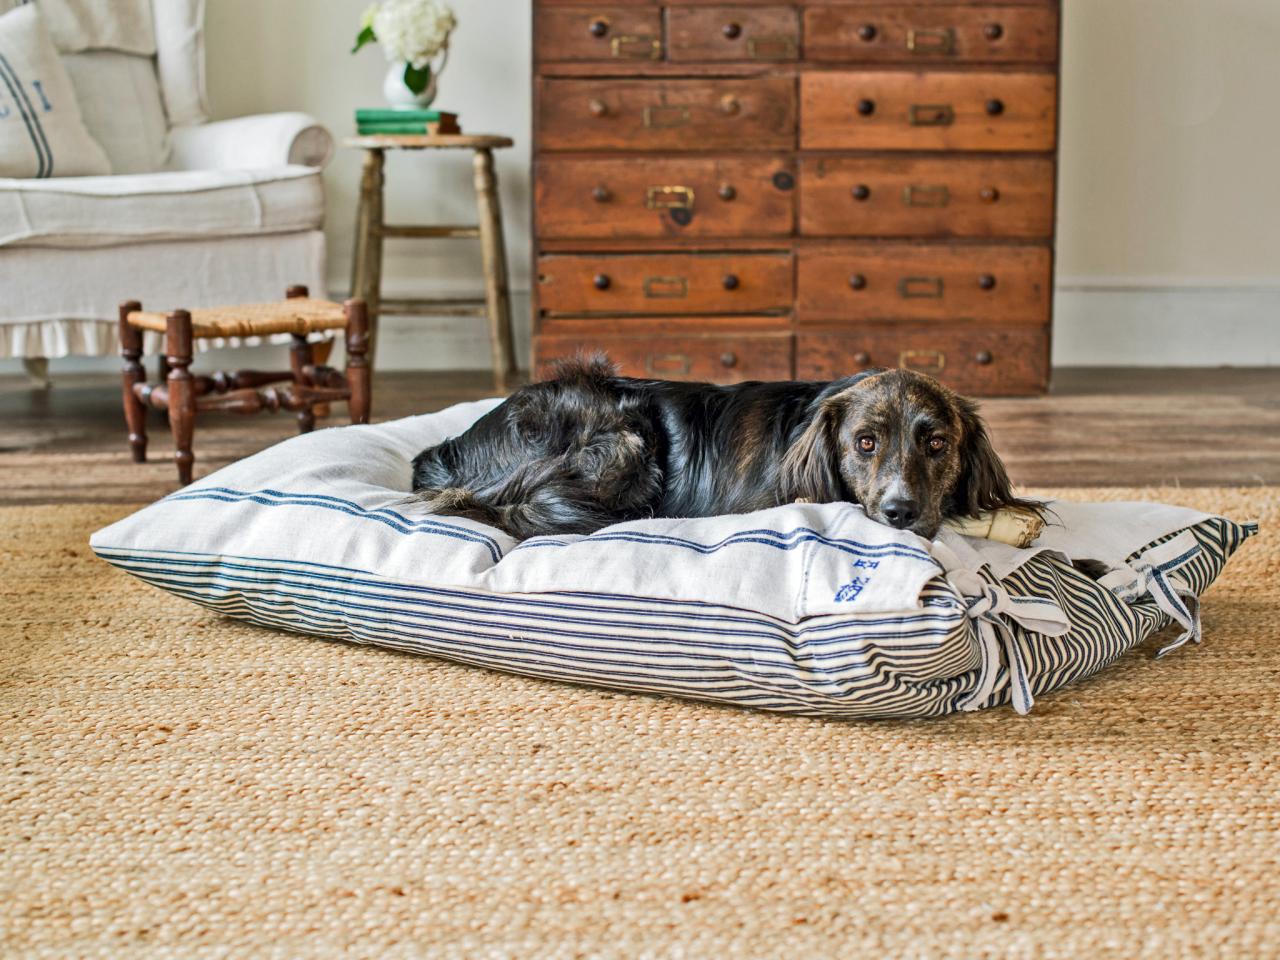 pet projects: make a diy dog bed | hgtv